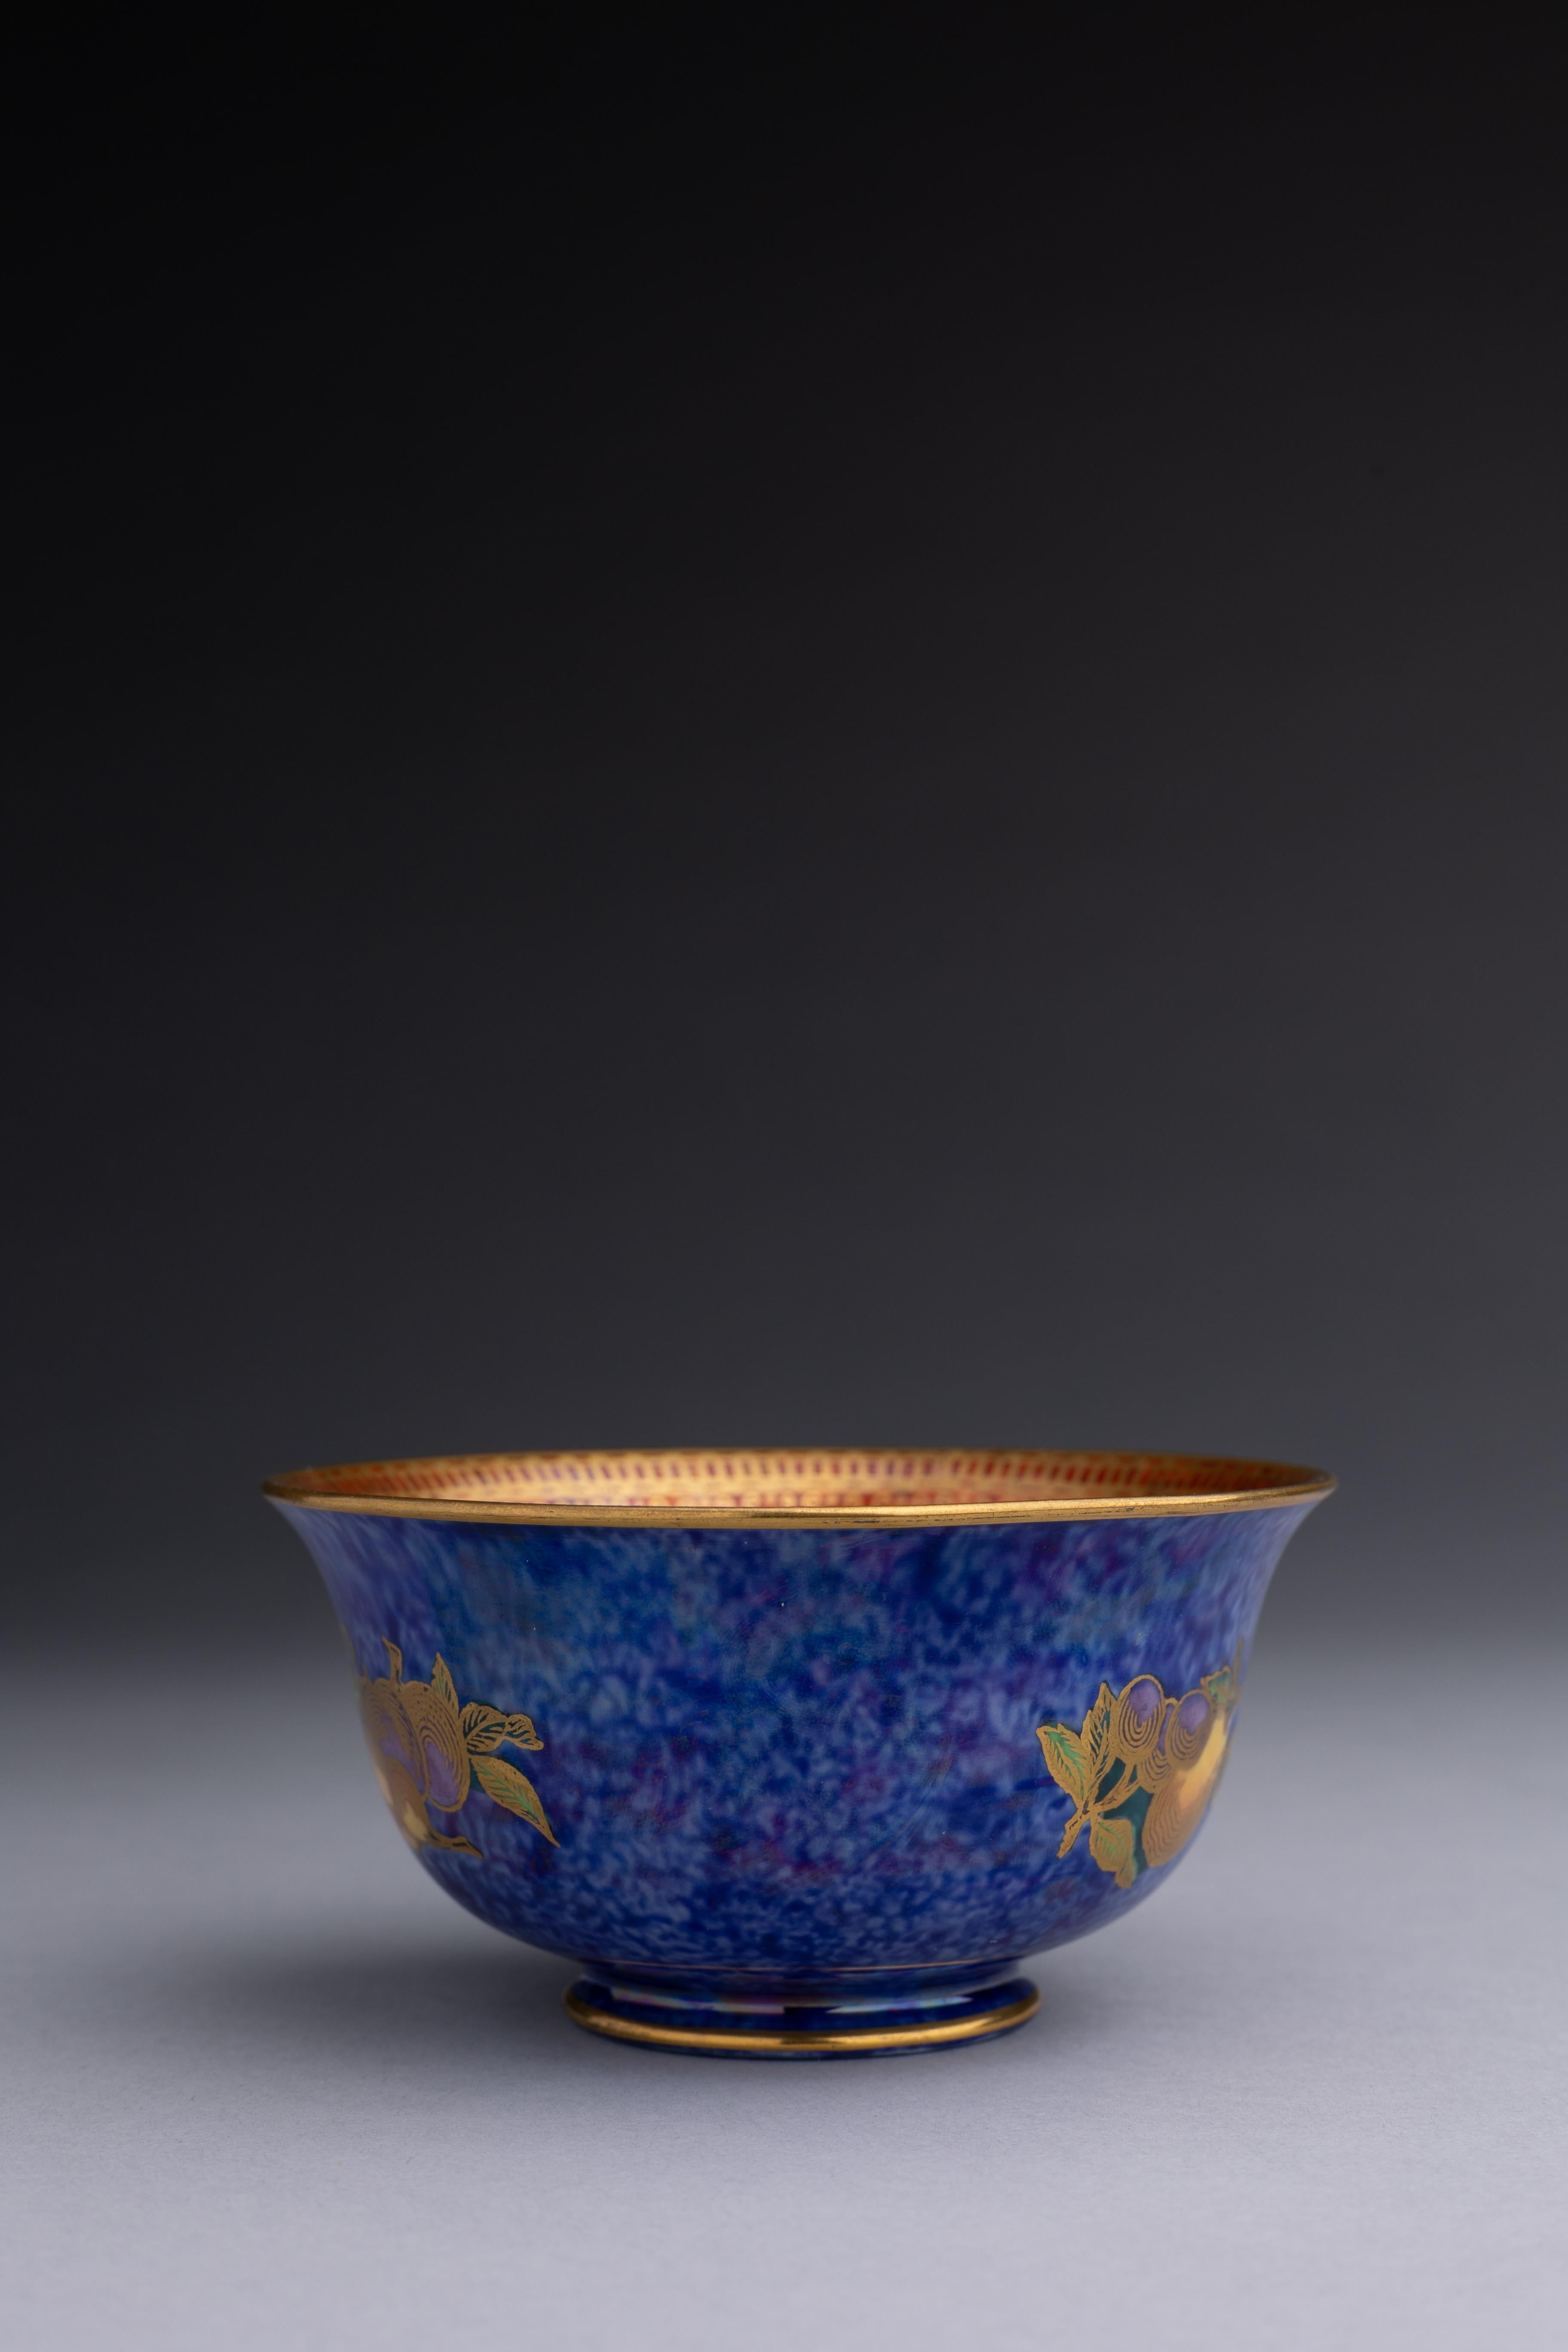 colorful ceramic fruit bowl